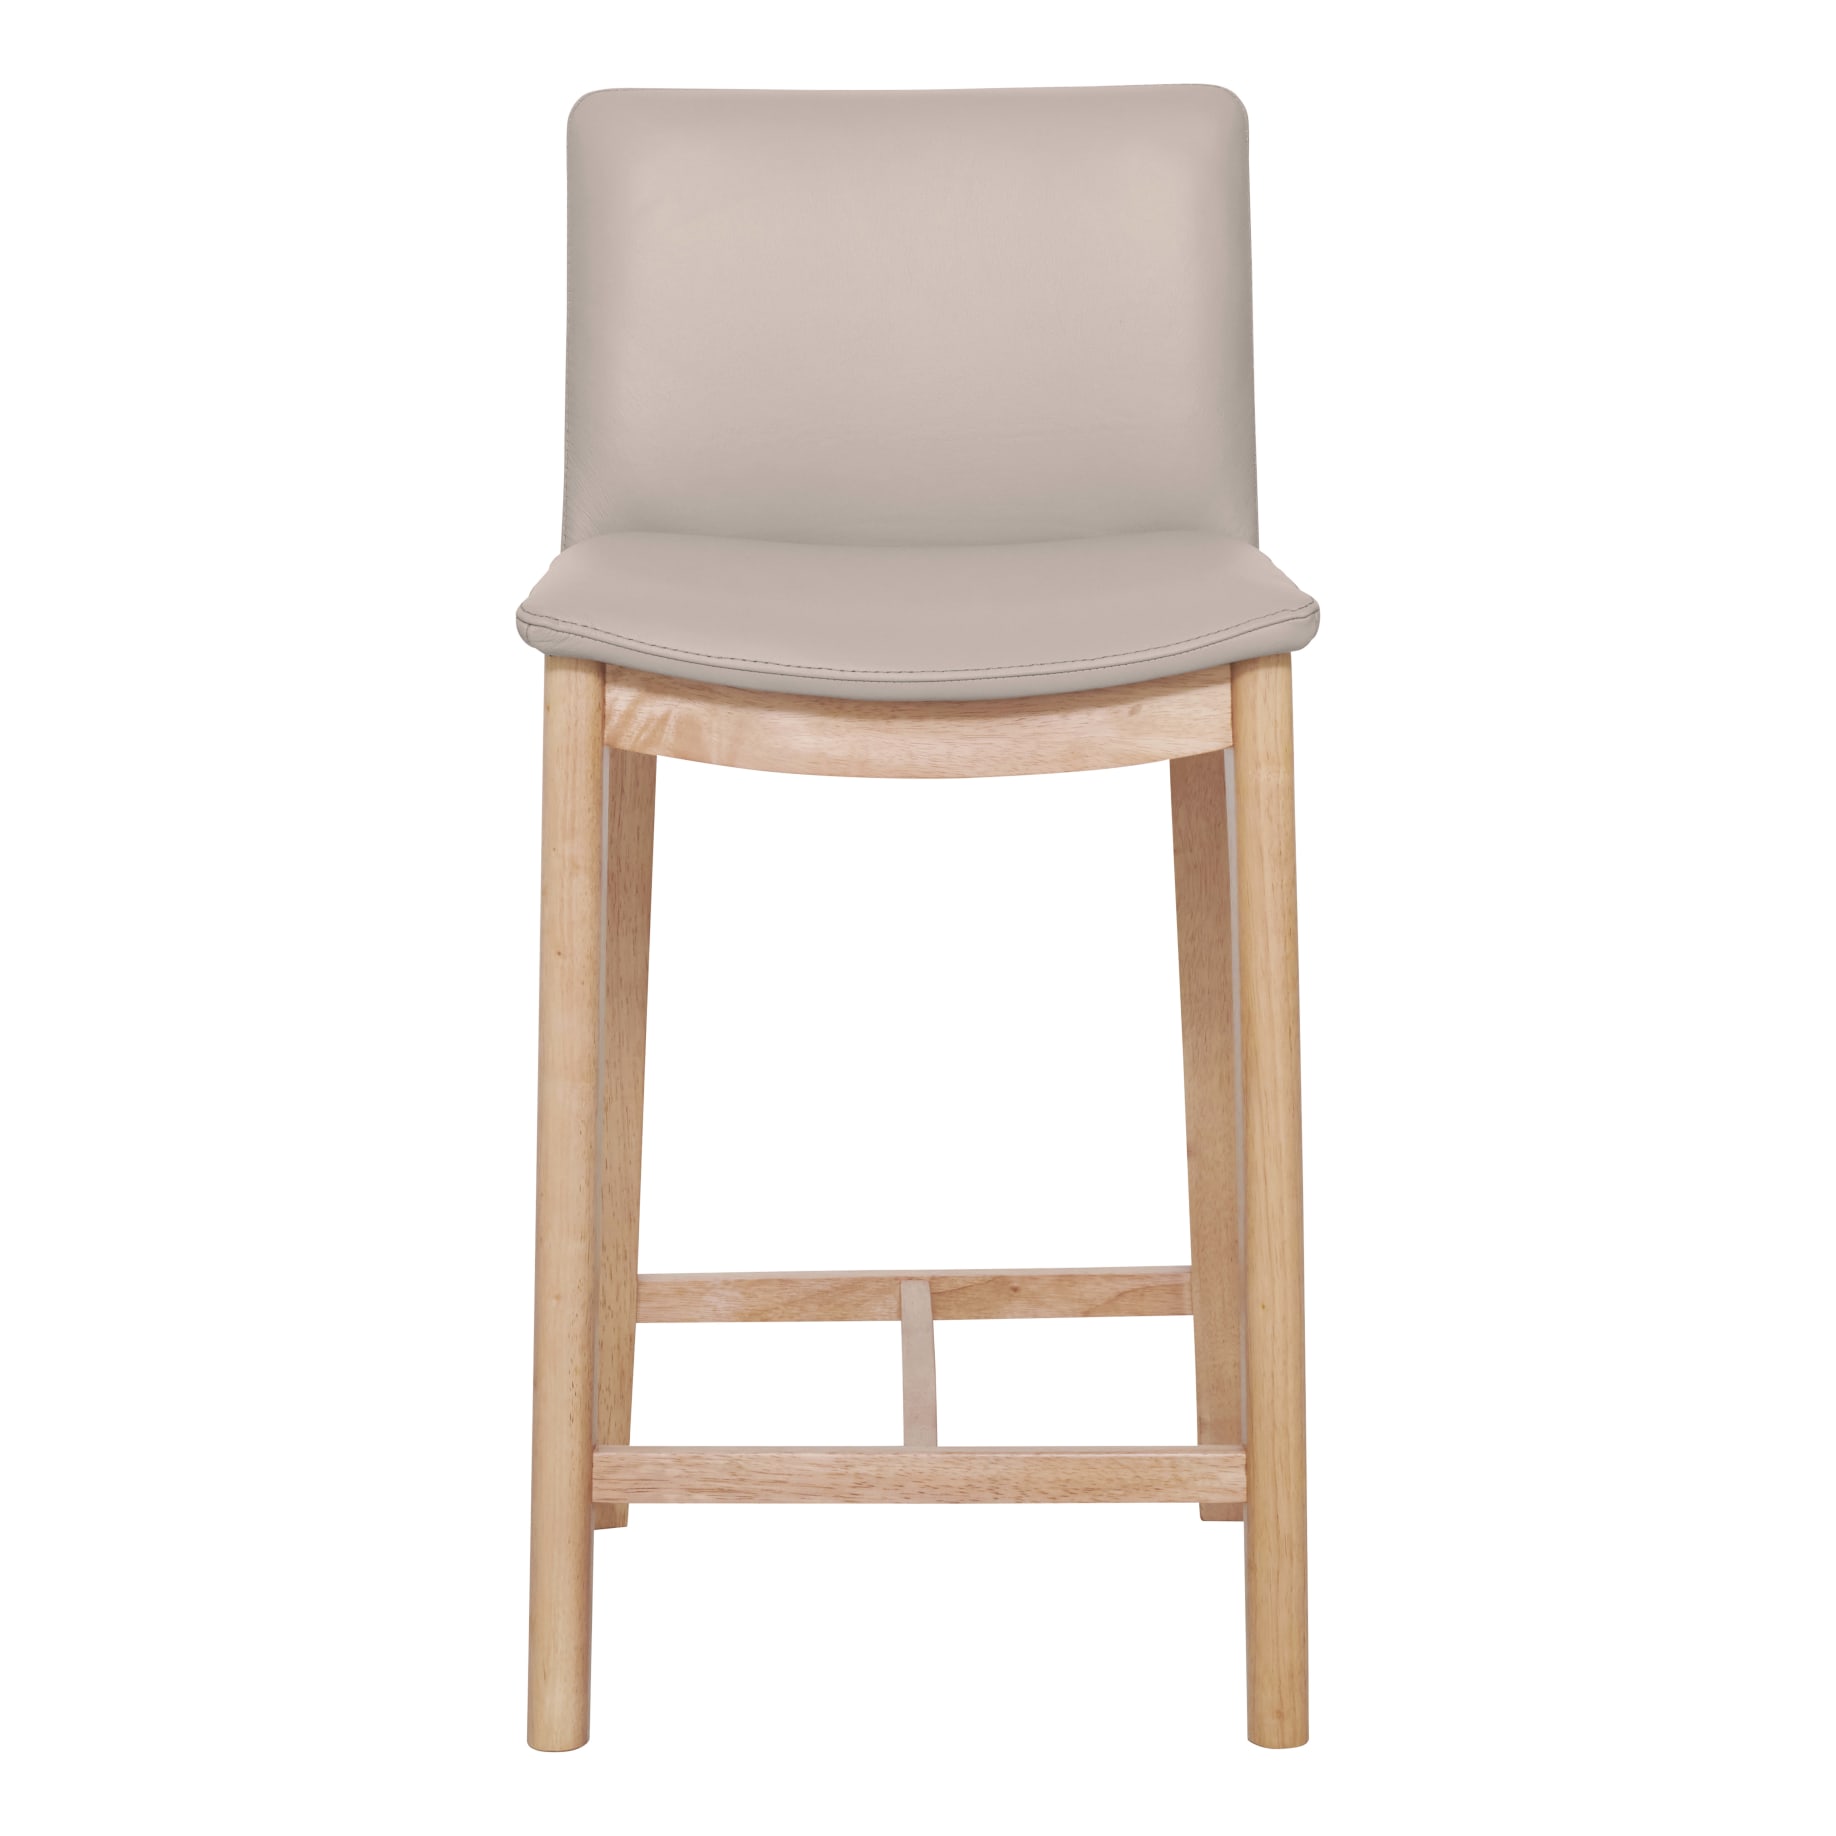 Everest Bar Chair in Leather Light Mocha / Oak Stain